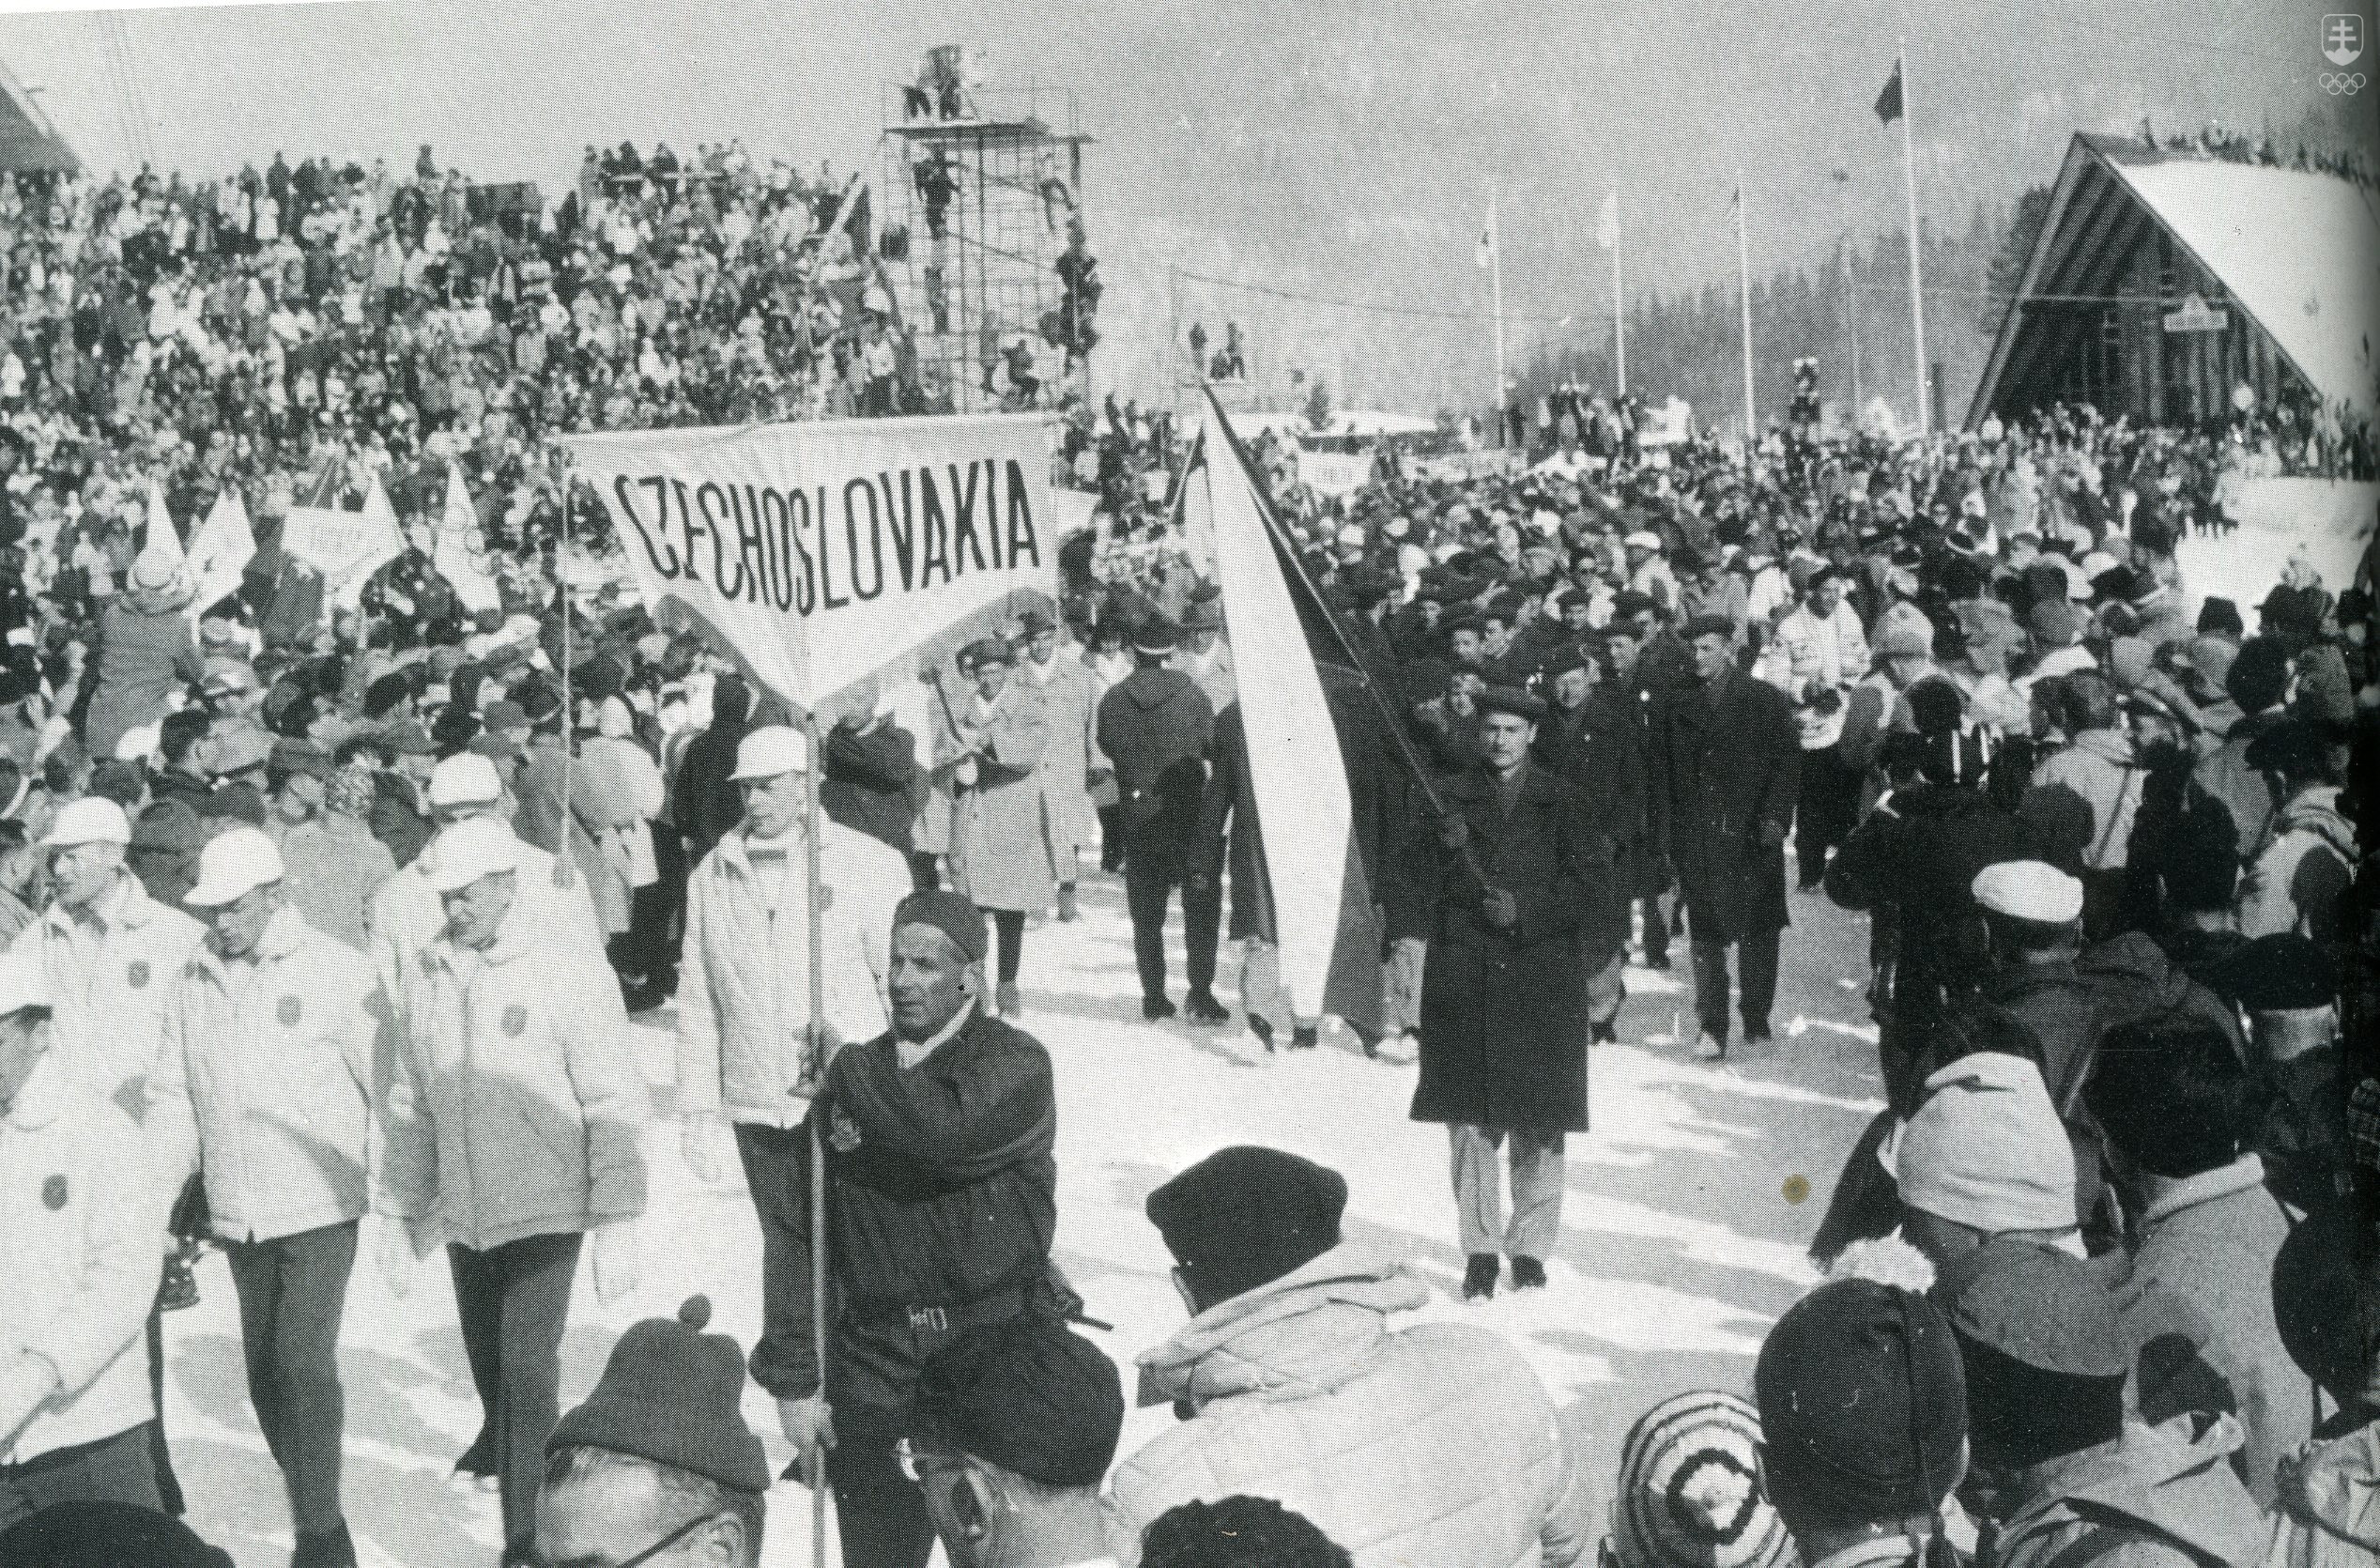 Ján Starší s československou vlajkou počas otváracieho ceremoniálu ZOH 1960.